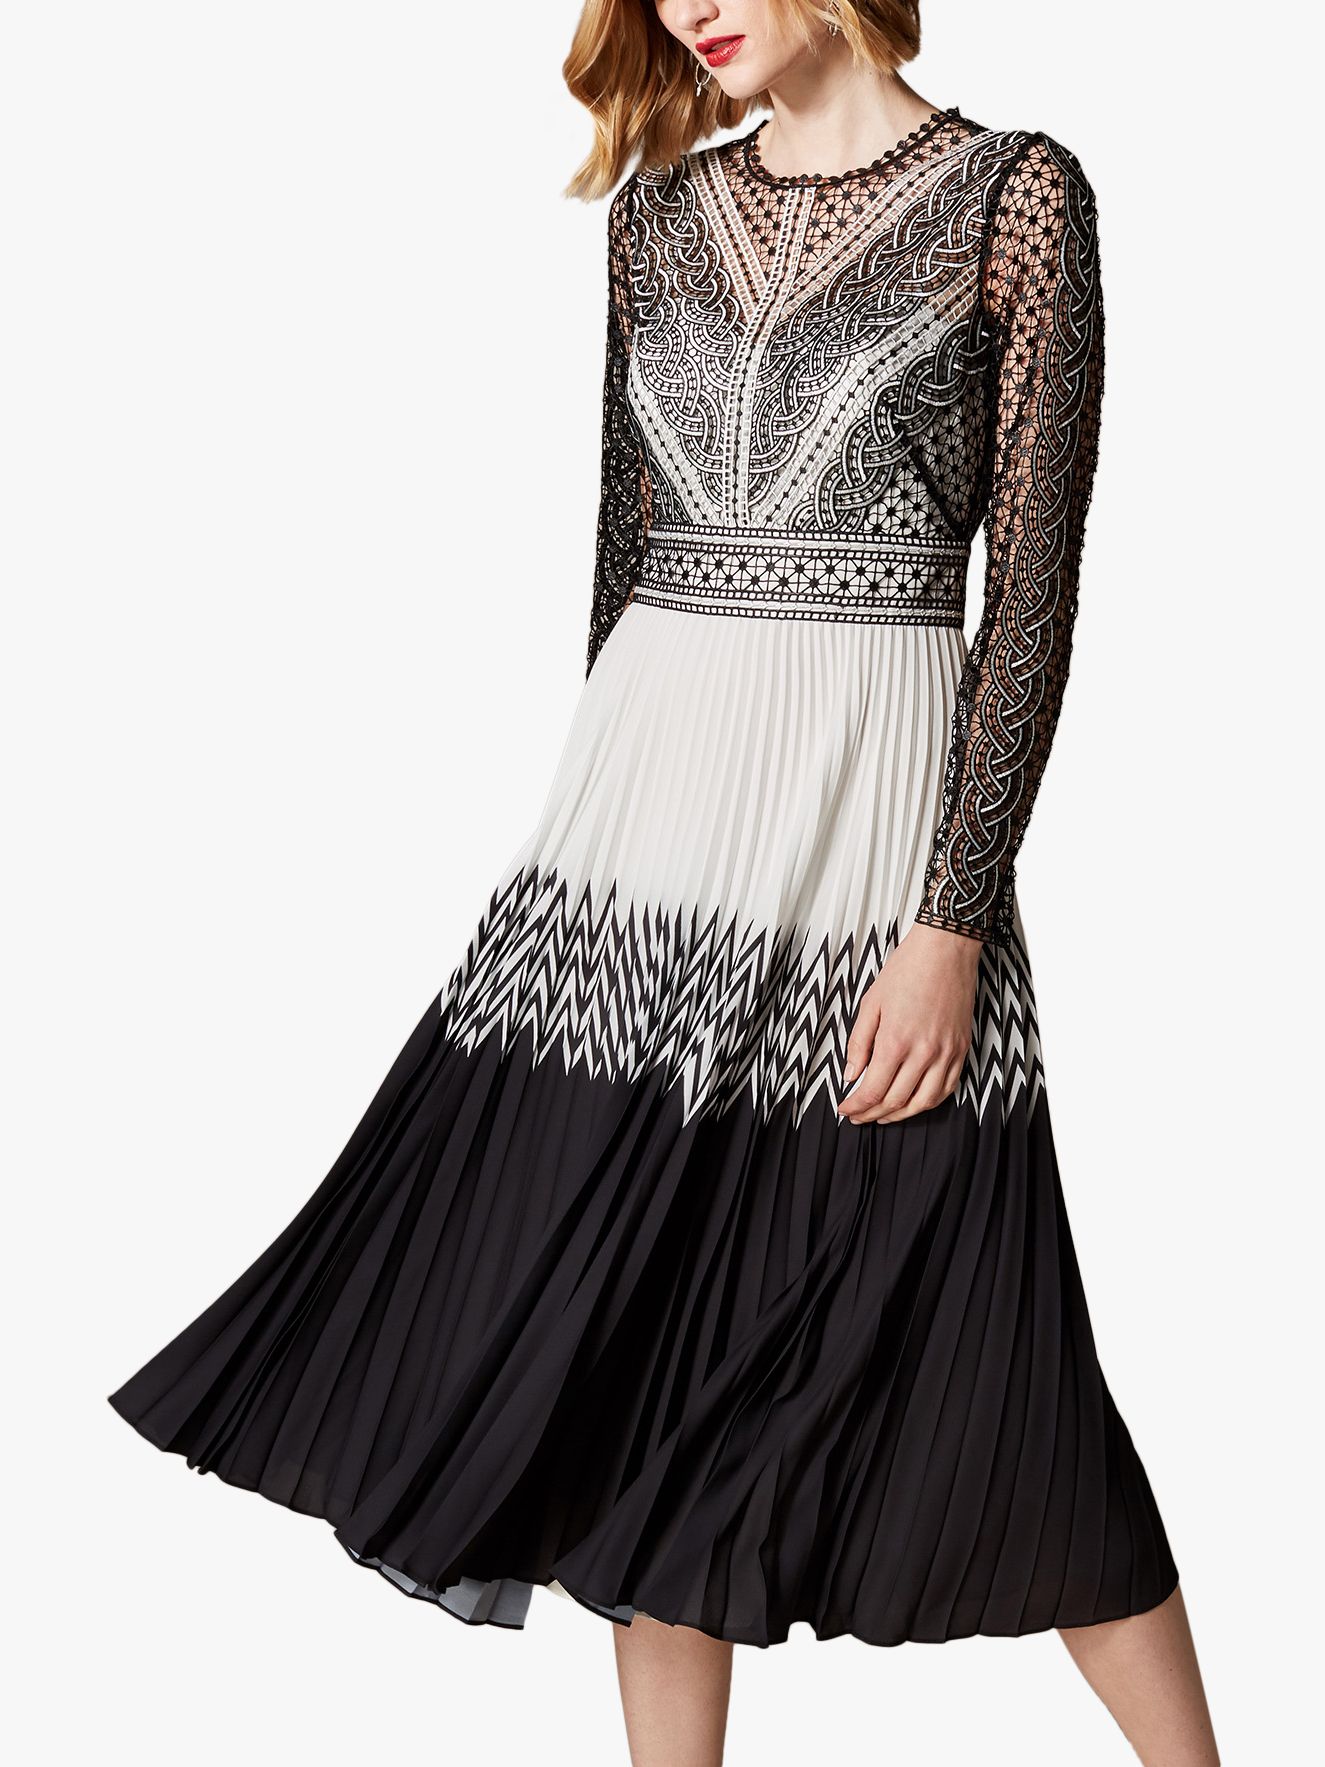 karen millen black and white dress